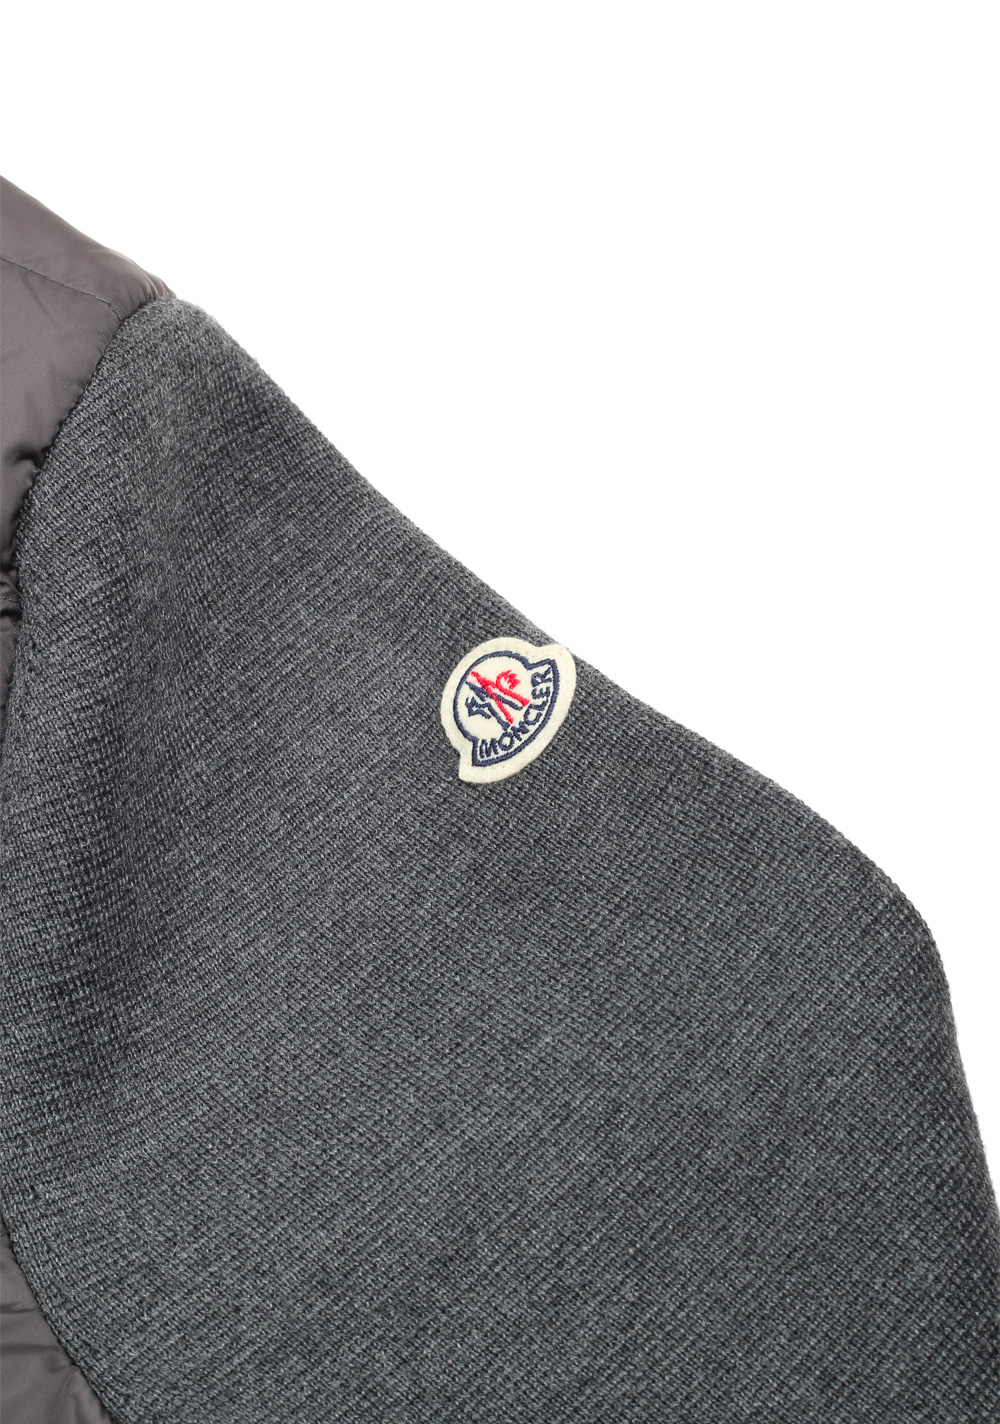 Moncler Gray Maglioni Tricot Cardigan Size 3XL / 60 / 50 U.S.